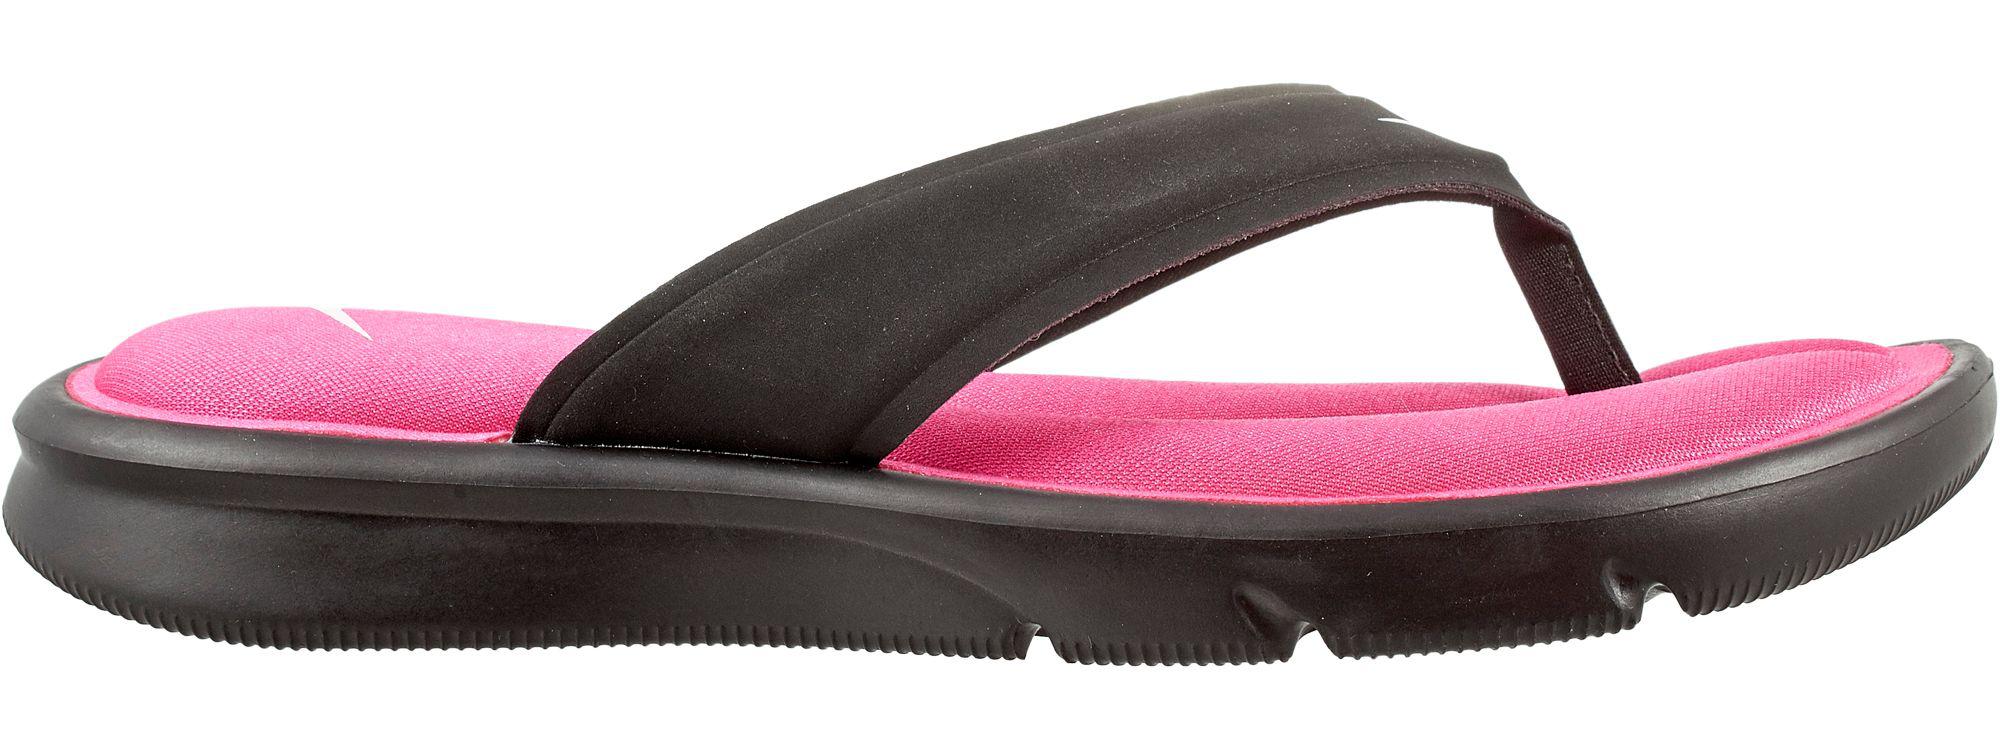 women's ultra comfort nike sandals